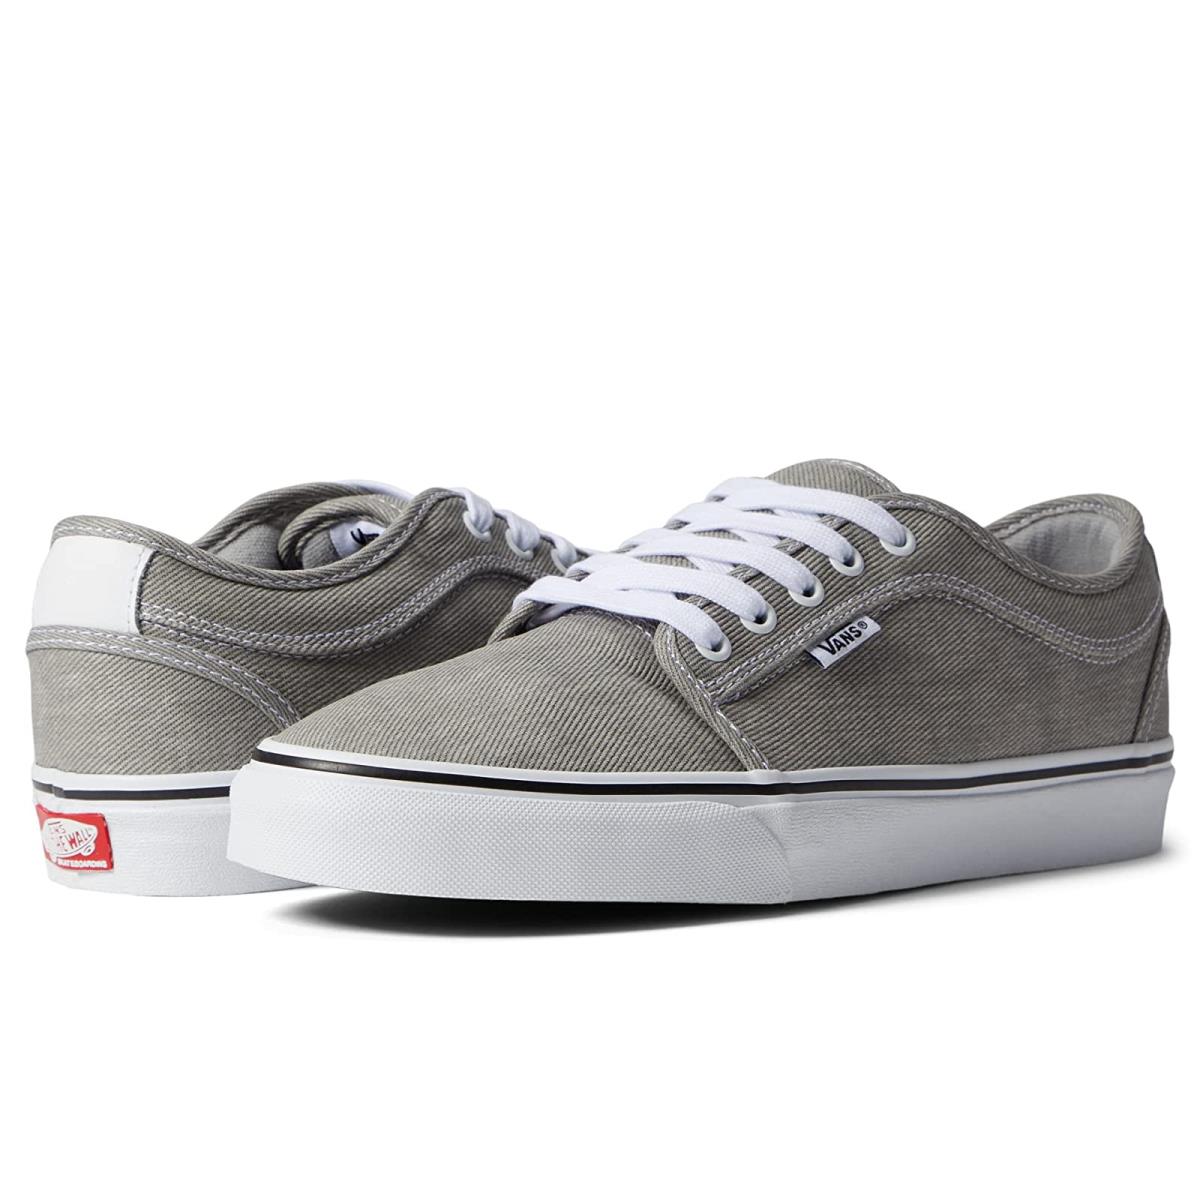 Man`s Sneakers Athletic Shoes Vans Skate Chukka Low (Denim) Gray/White